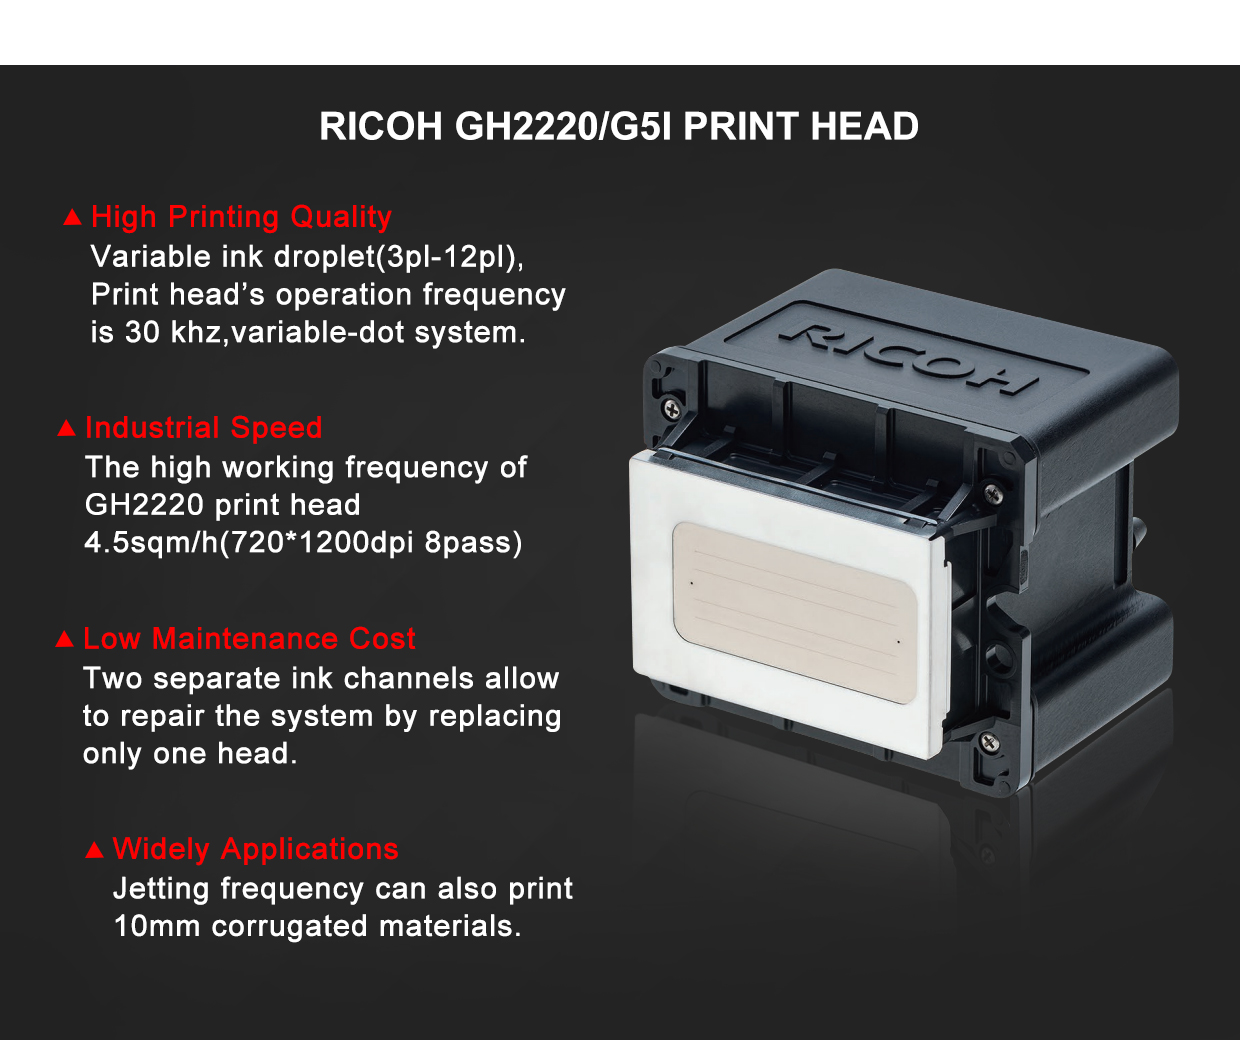 Ricoh G5i print head